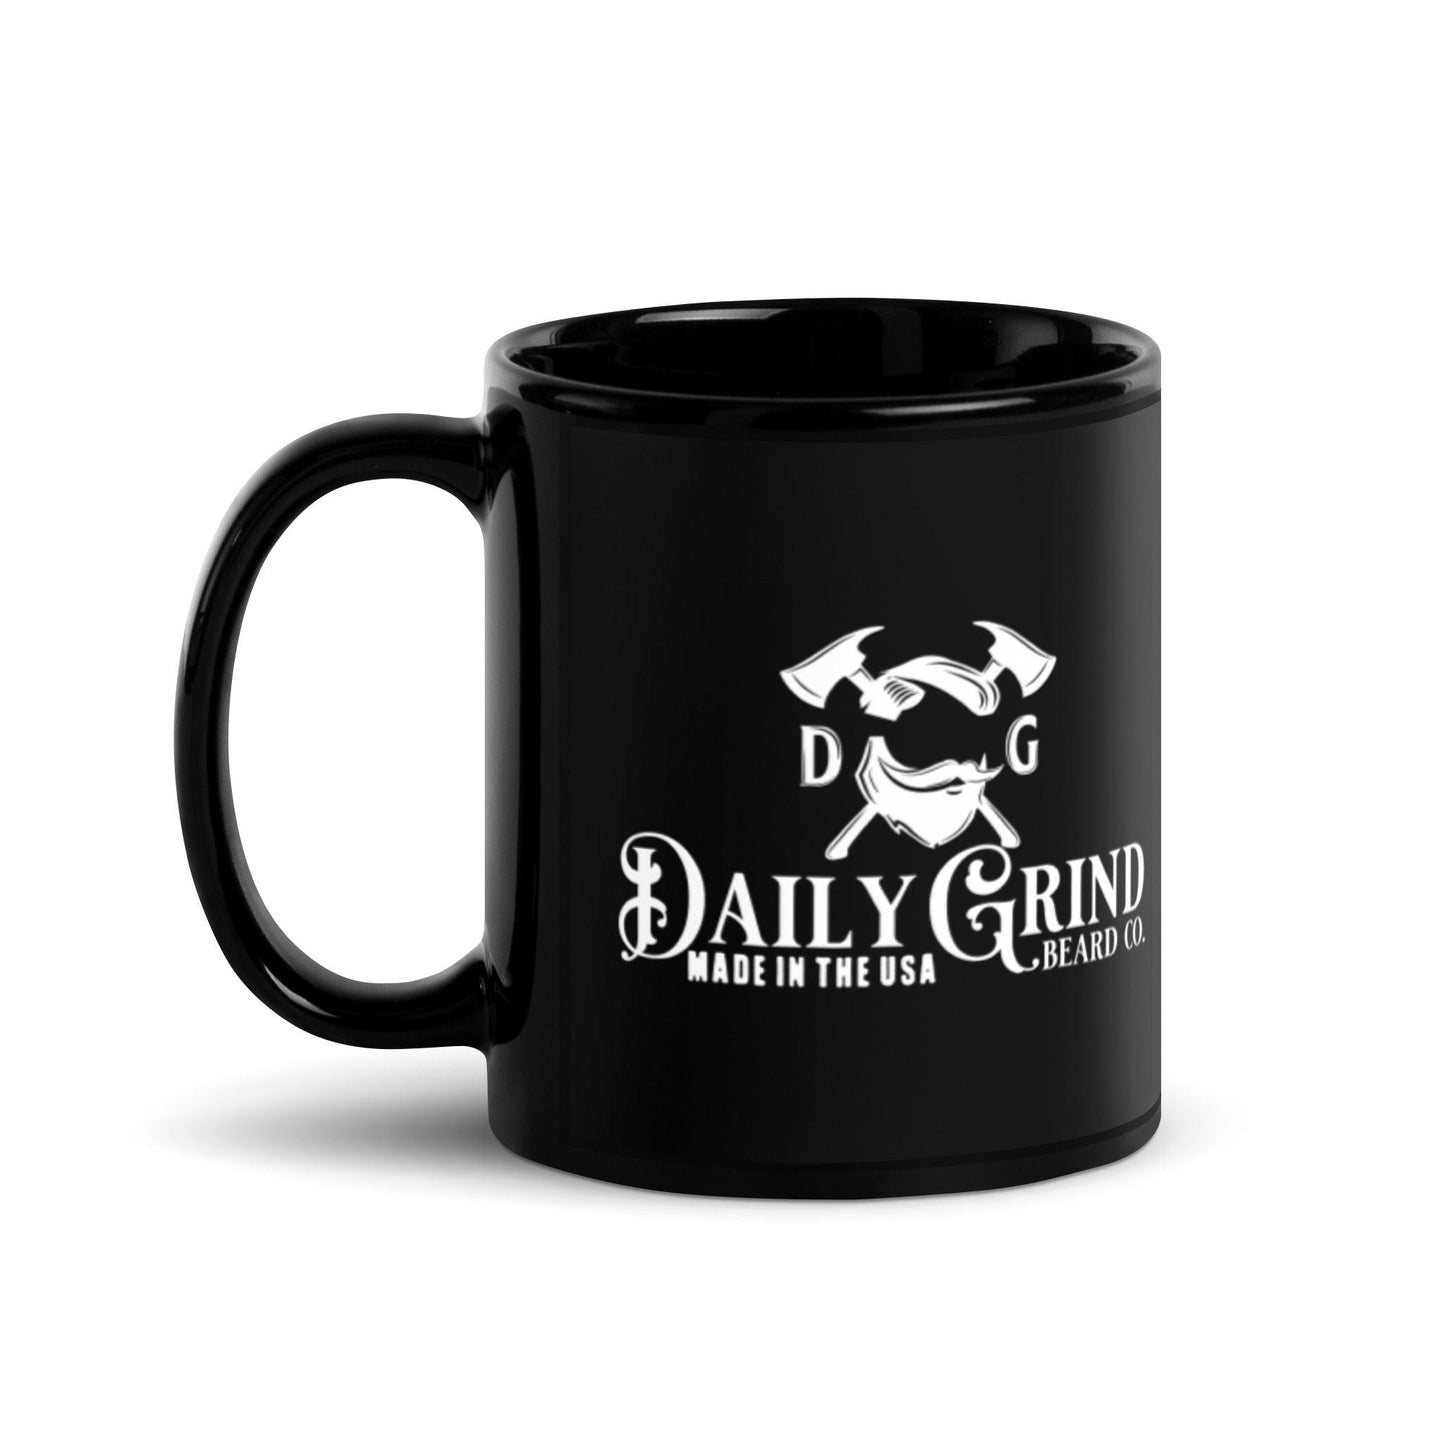 Daily Grind Black Glossy Coffee Mug - Daily Grind